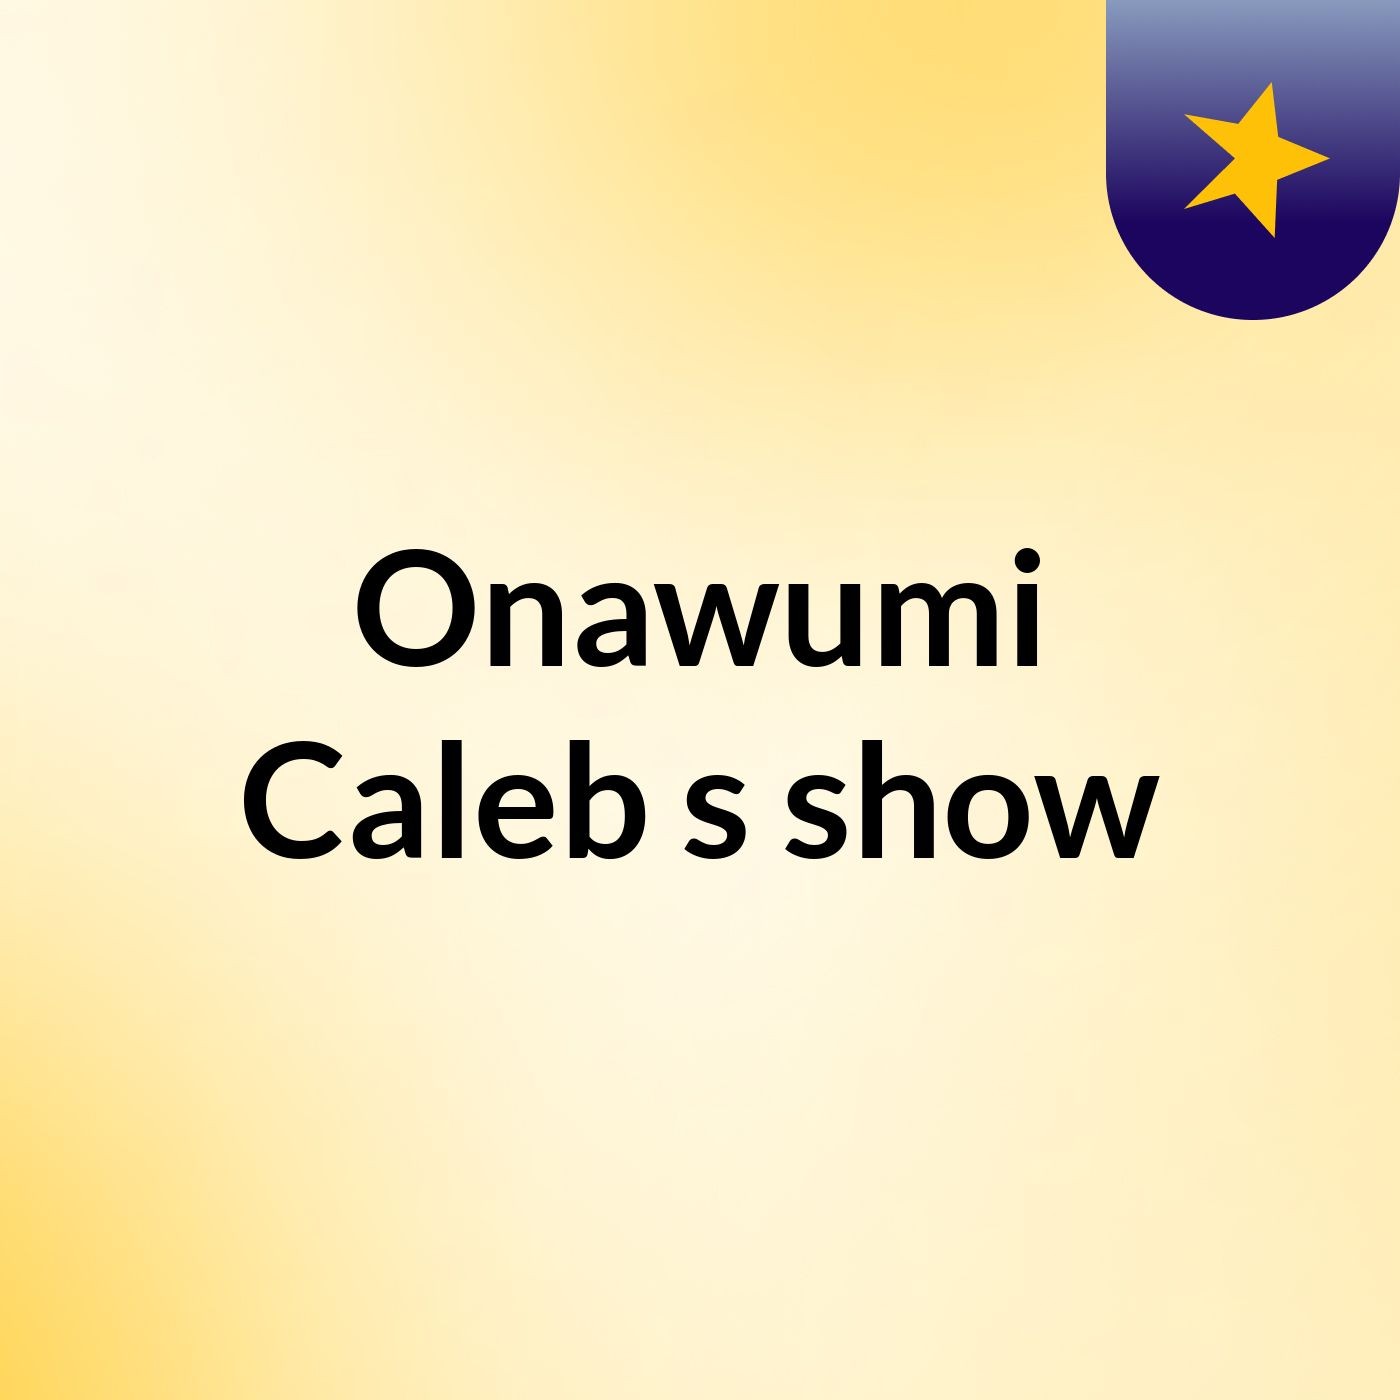 Onawumi Caleb's show